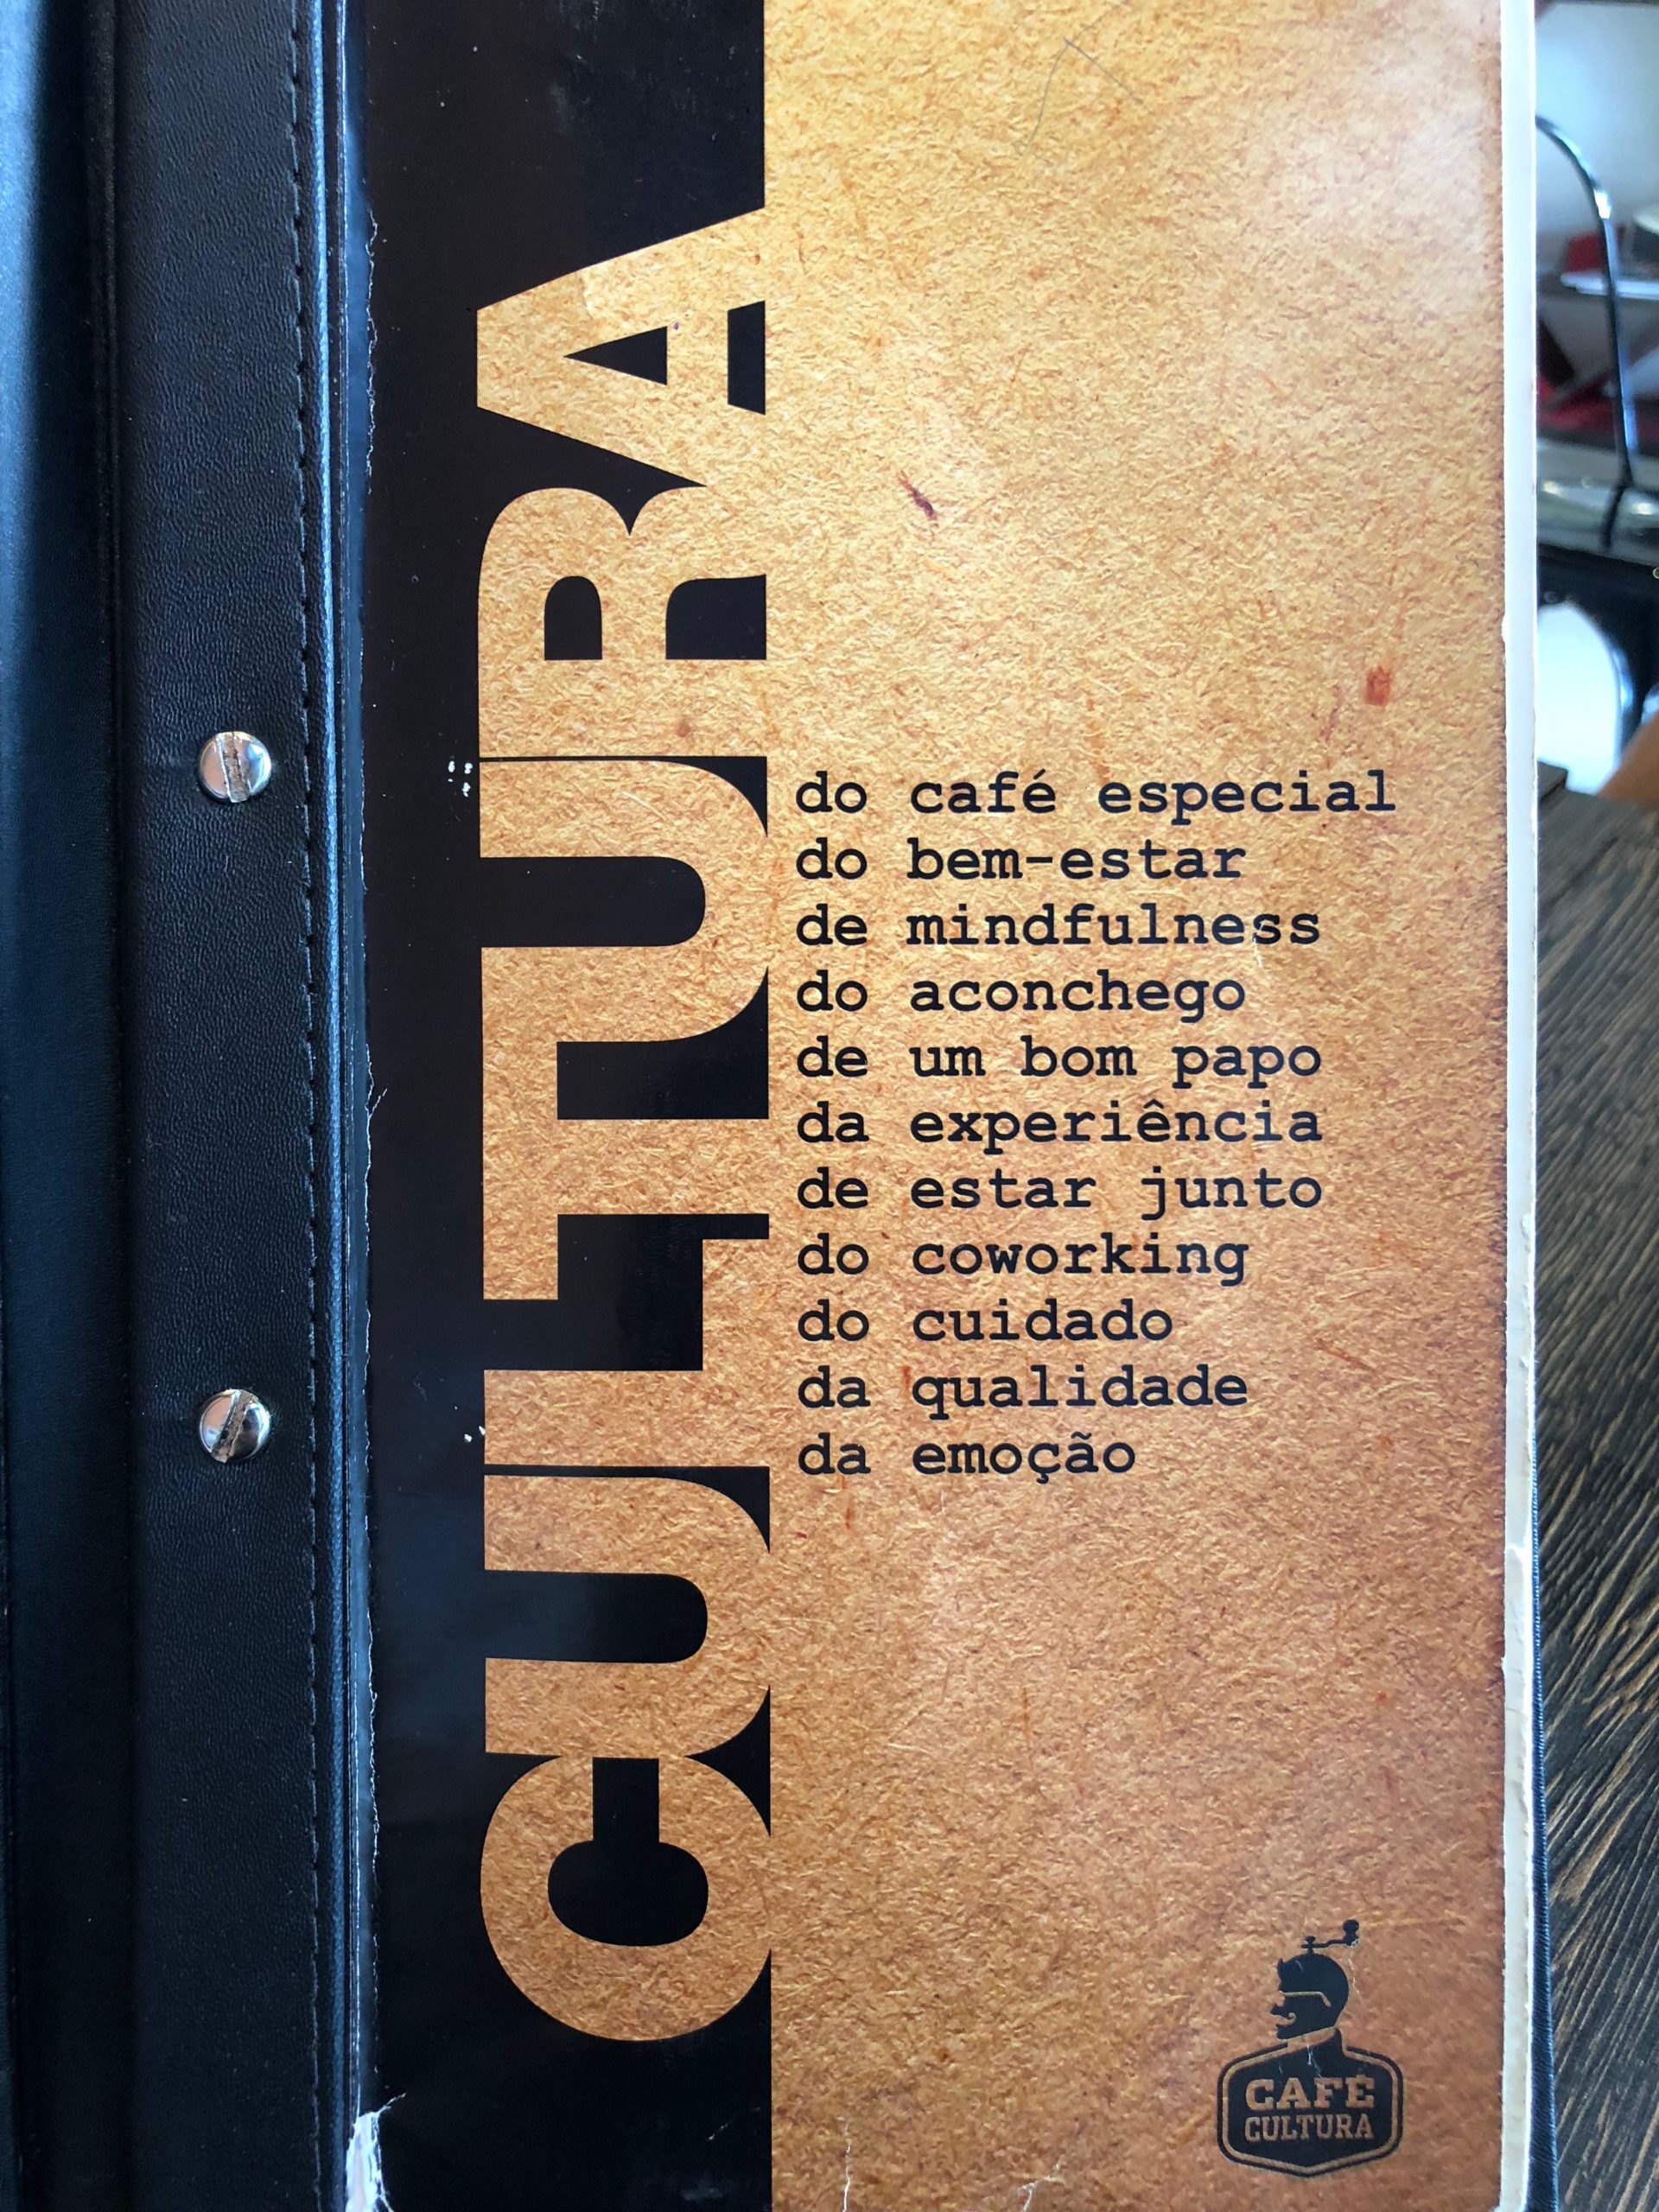 café cultura 1